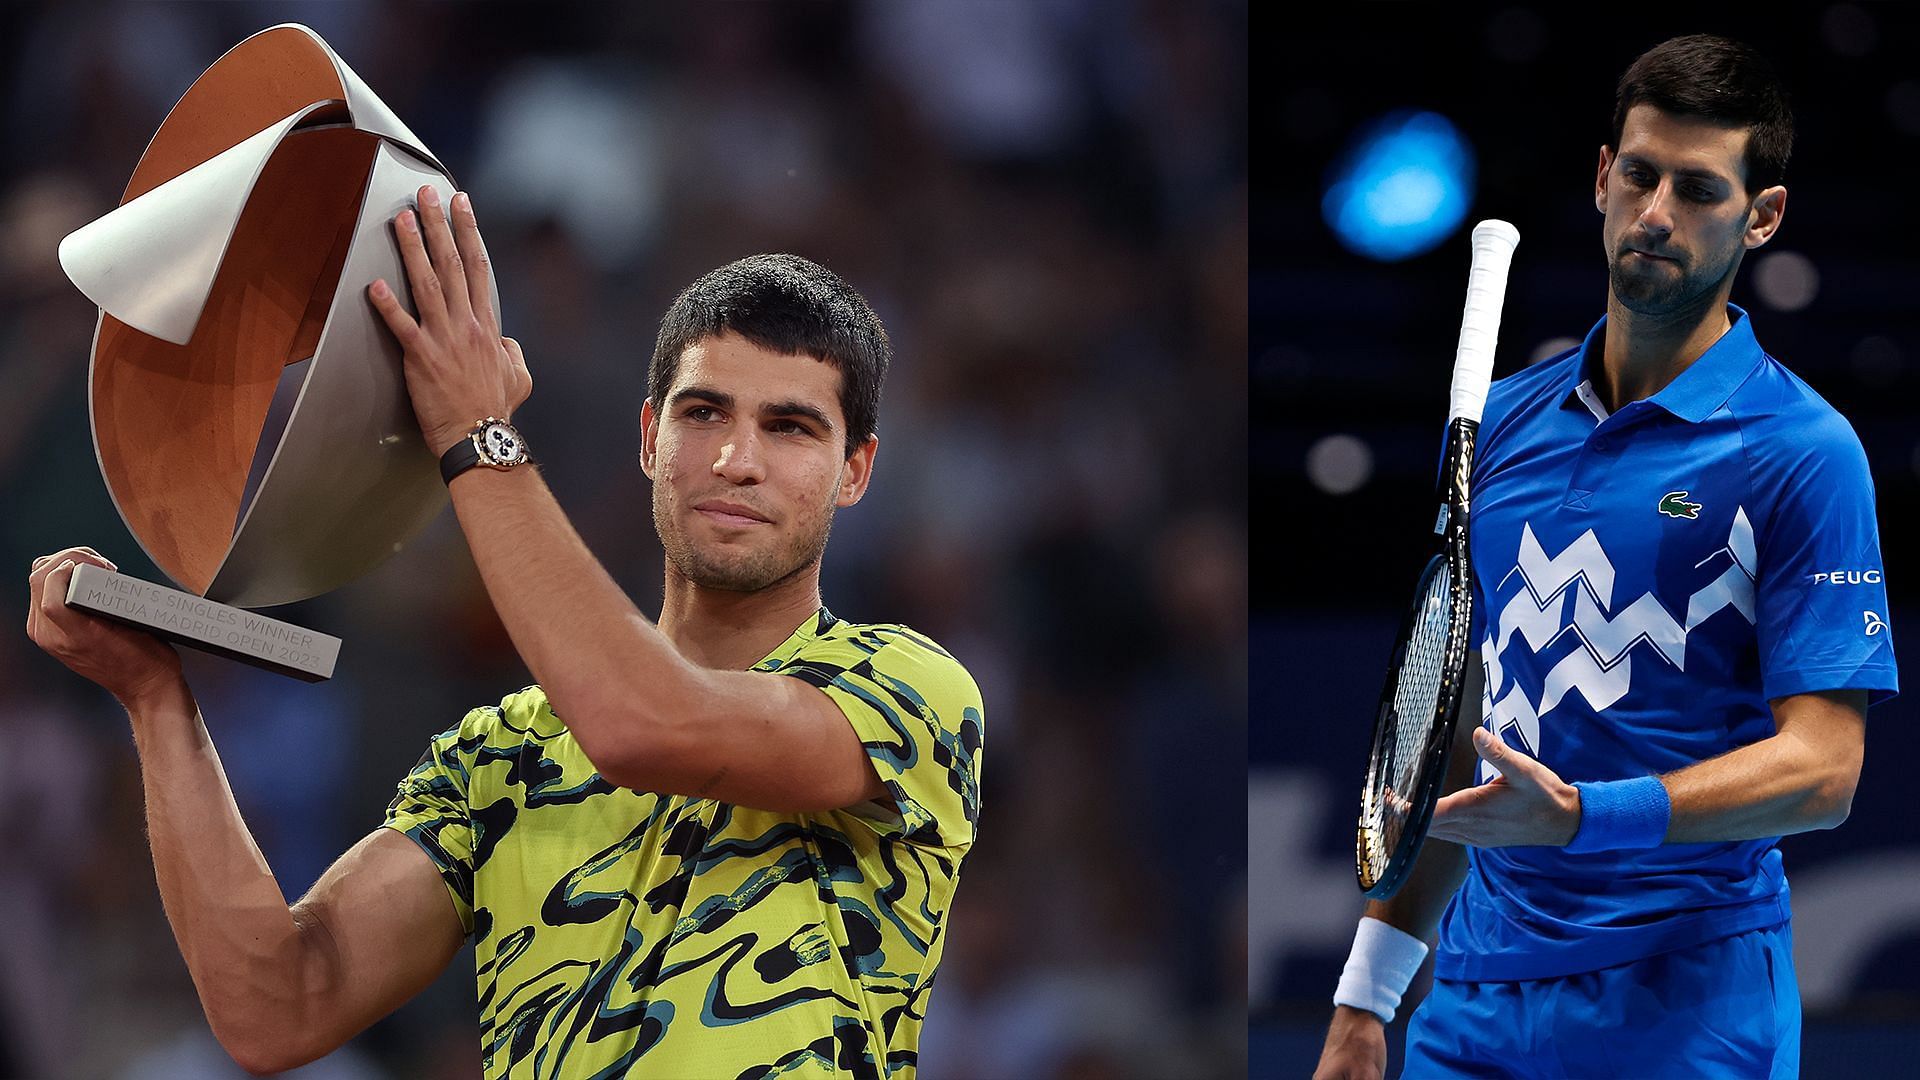 Novak Djokovic's absence puts an asterisk on Carlos Alcaraz's recent success, says tennis journalist